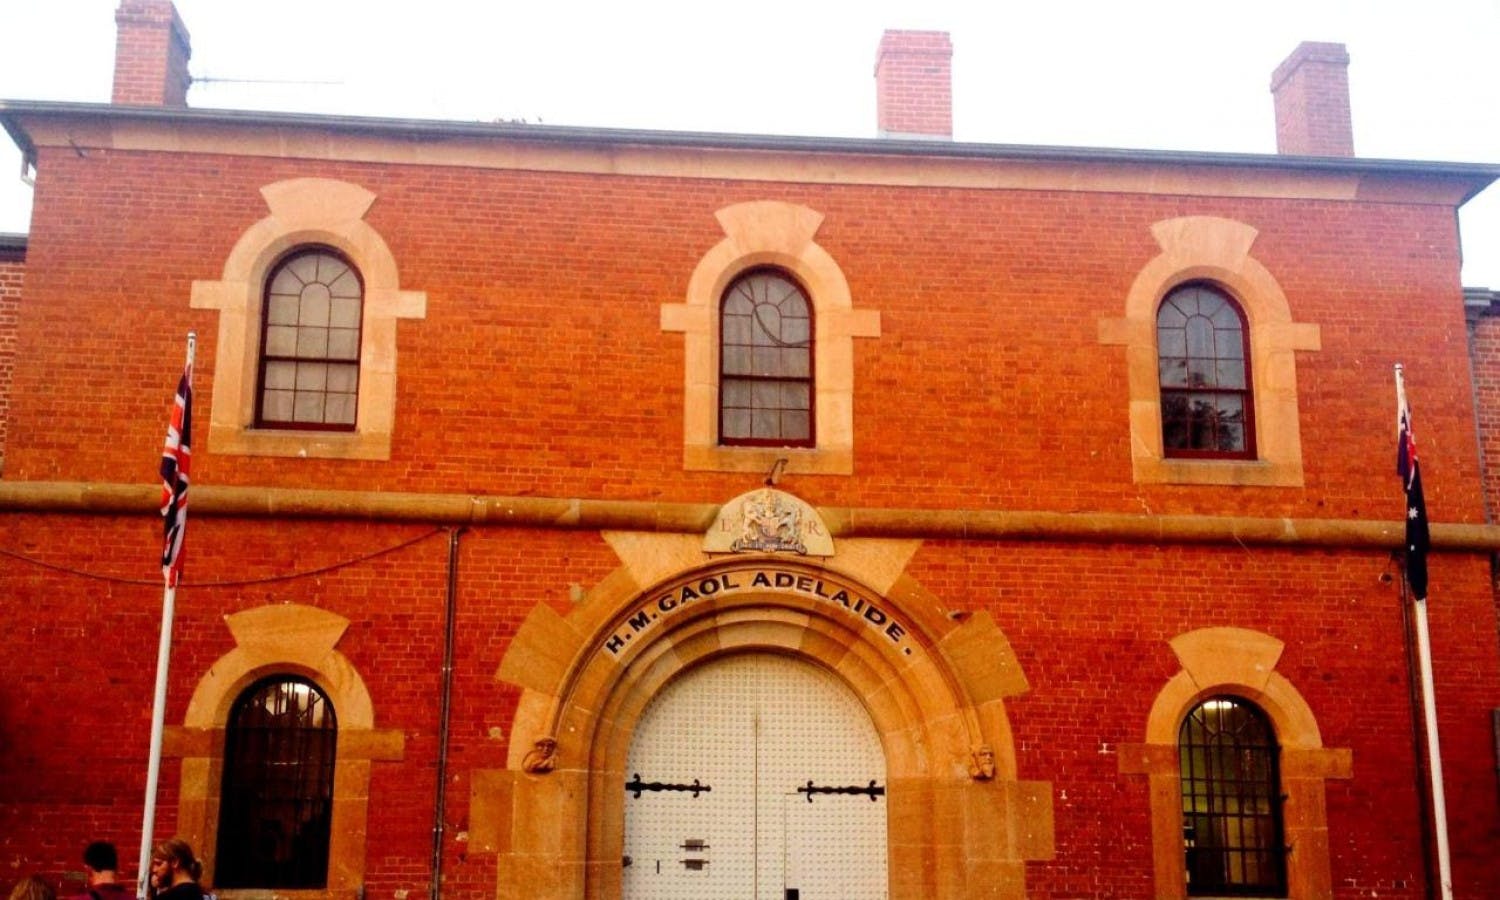 Adelaide_Gaol_Front_2000_x_1500_lg.jpg